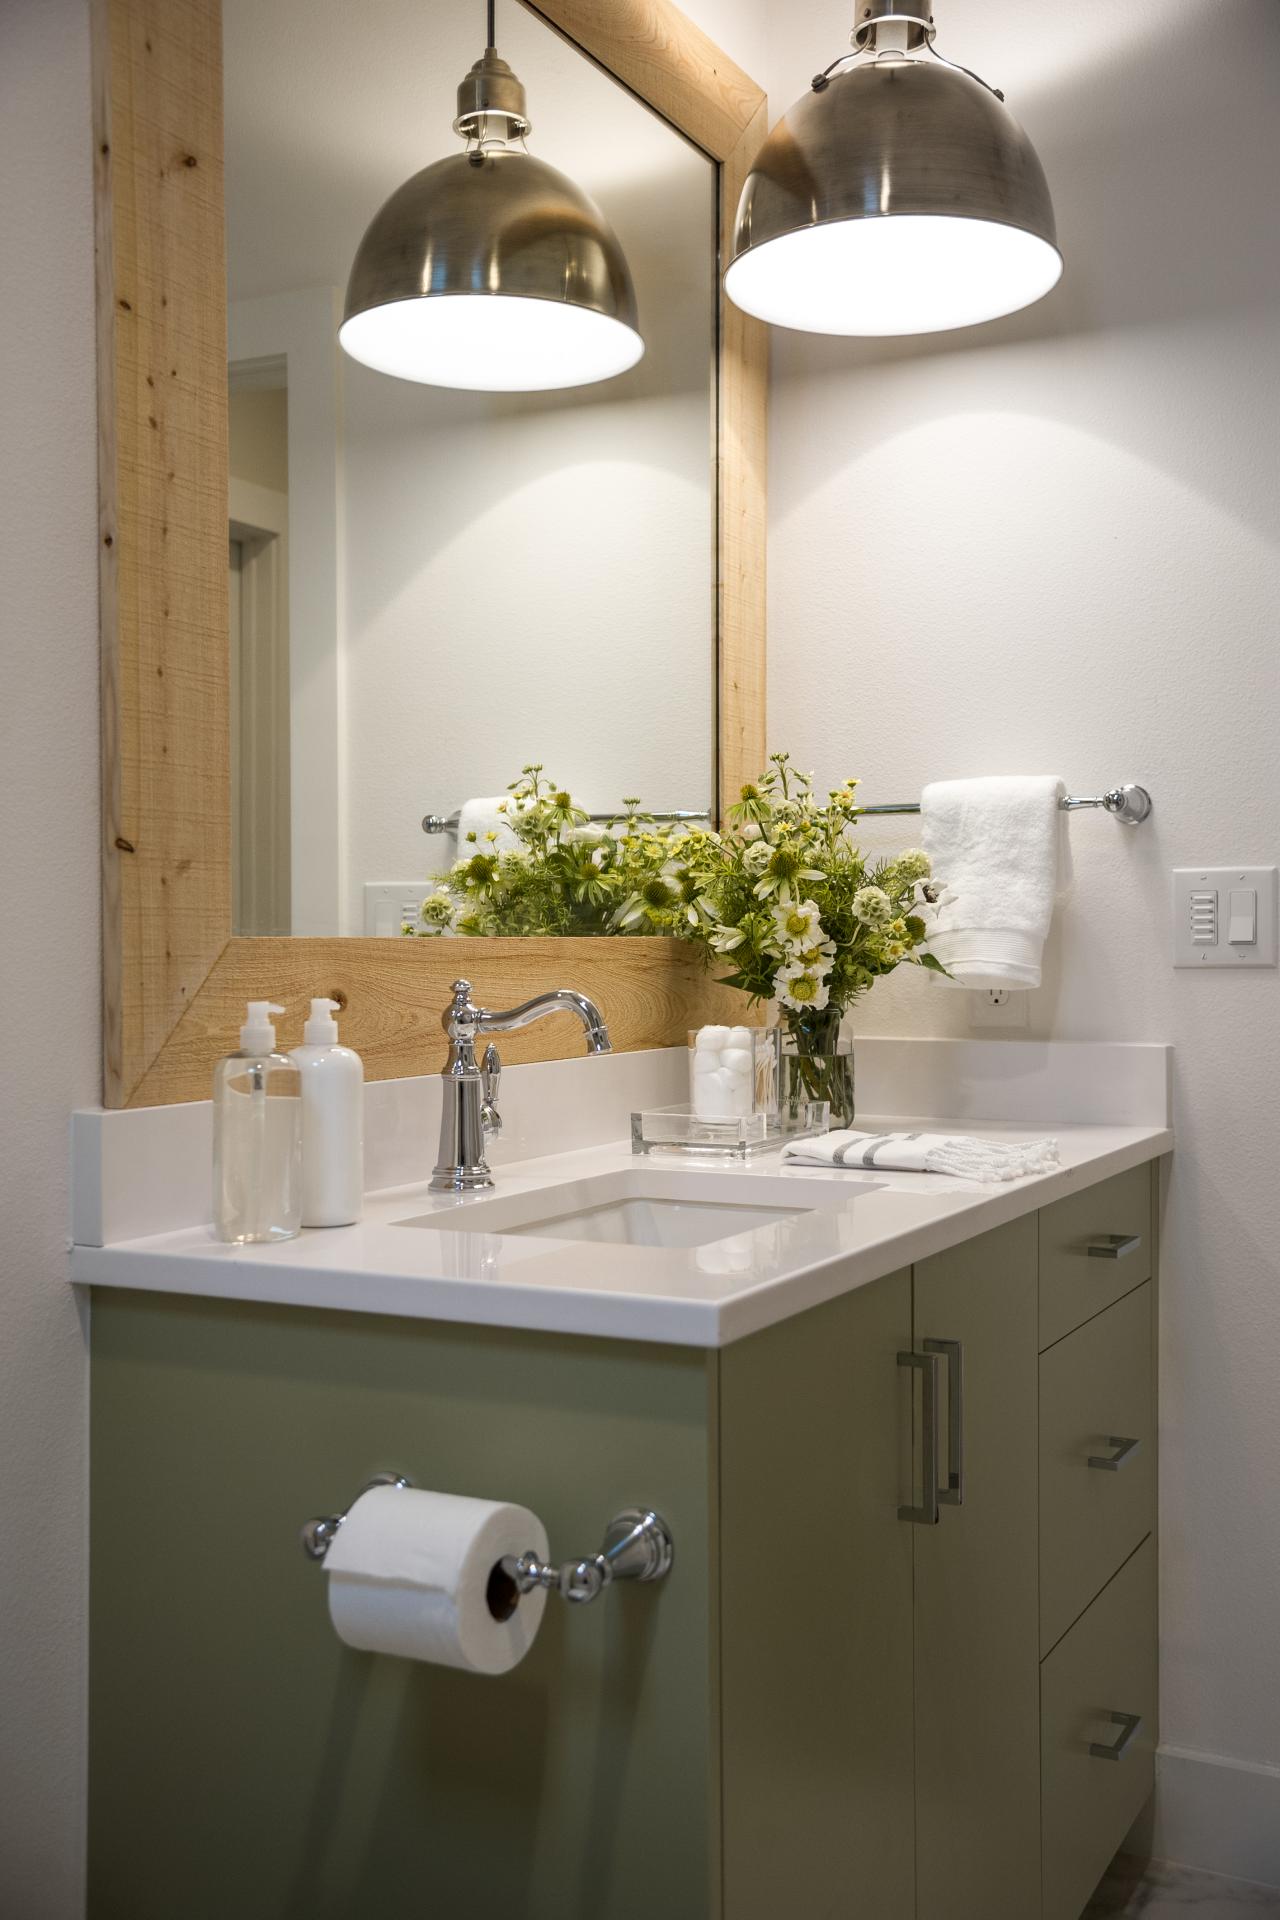 3 Bathroom Vanity Lighting Installations To Inspire Your Next Project